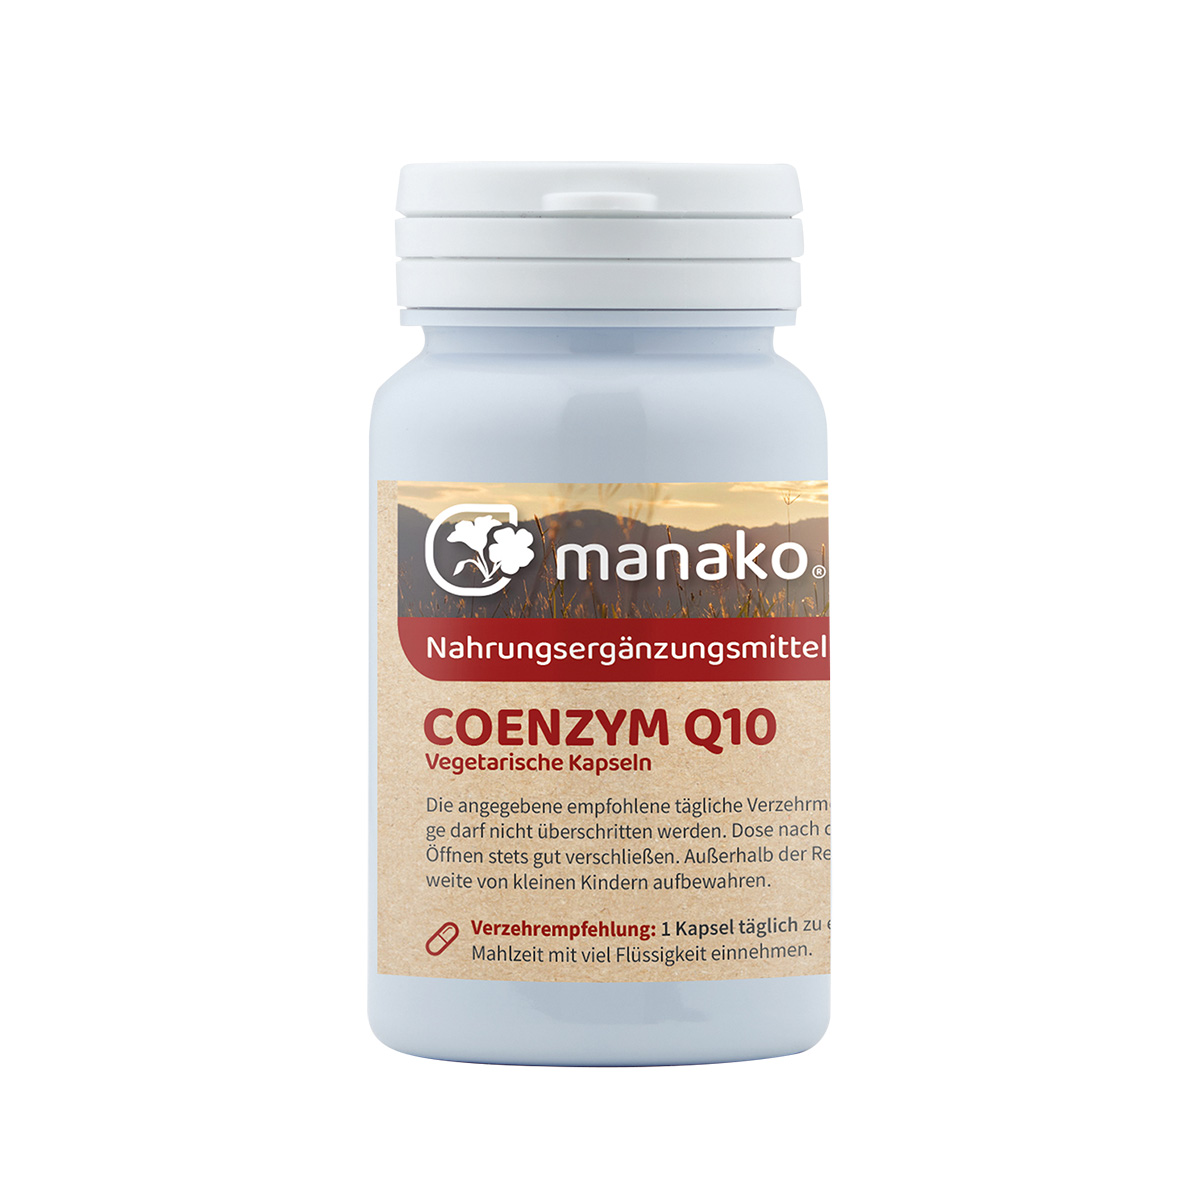 manako Coenzym Q10, 90 vegetarische Kapseln